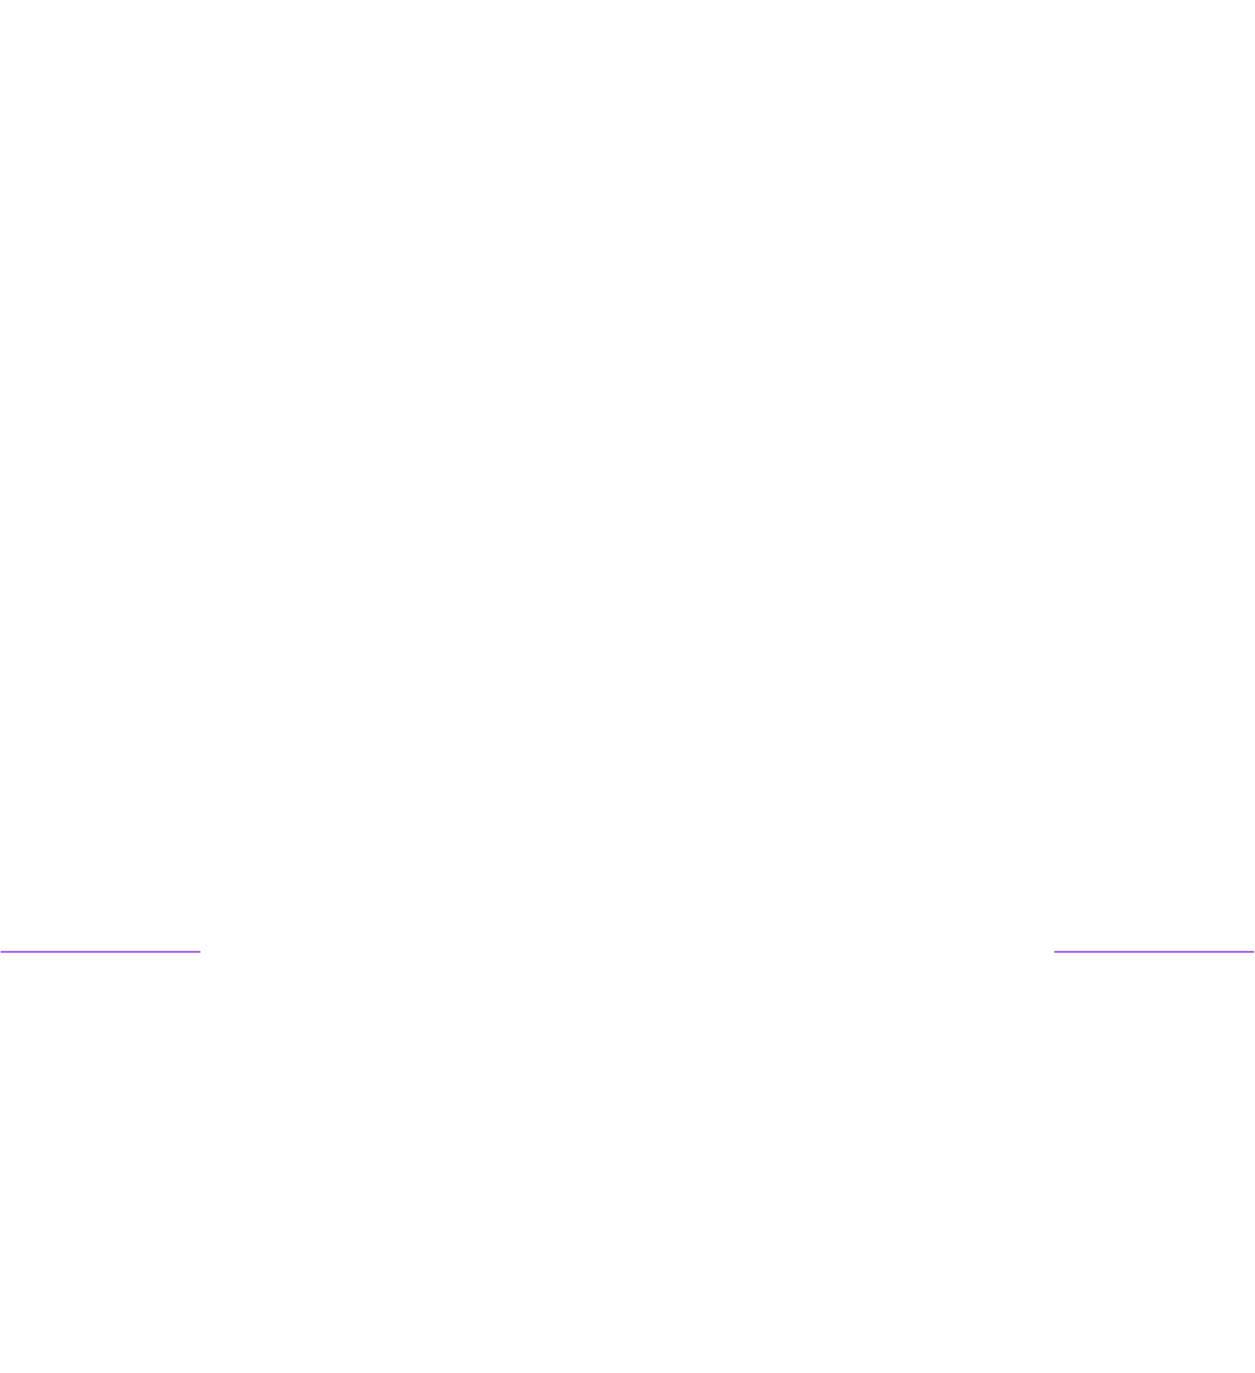 THE FACT MUSIC AWARDS EXHIBITION B★VERSE（BTS、星を歌う）